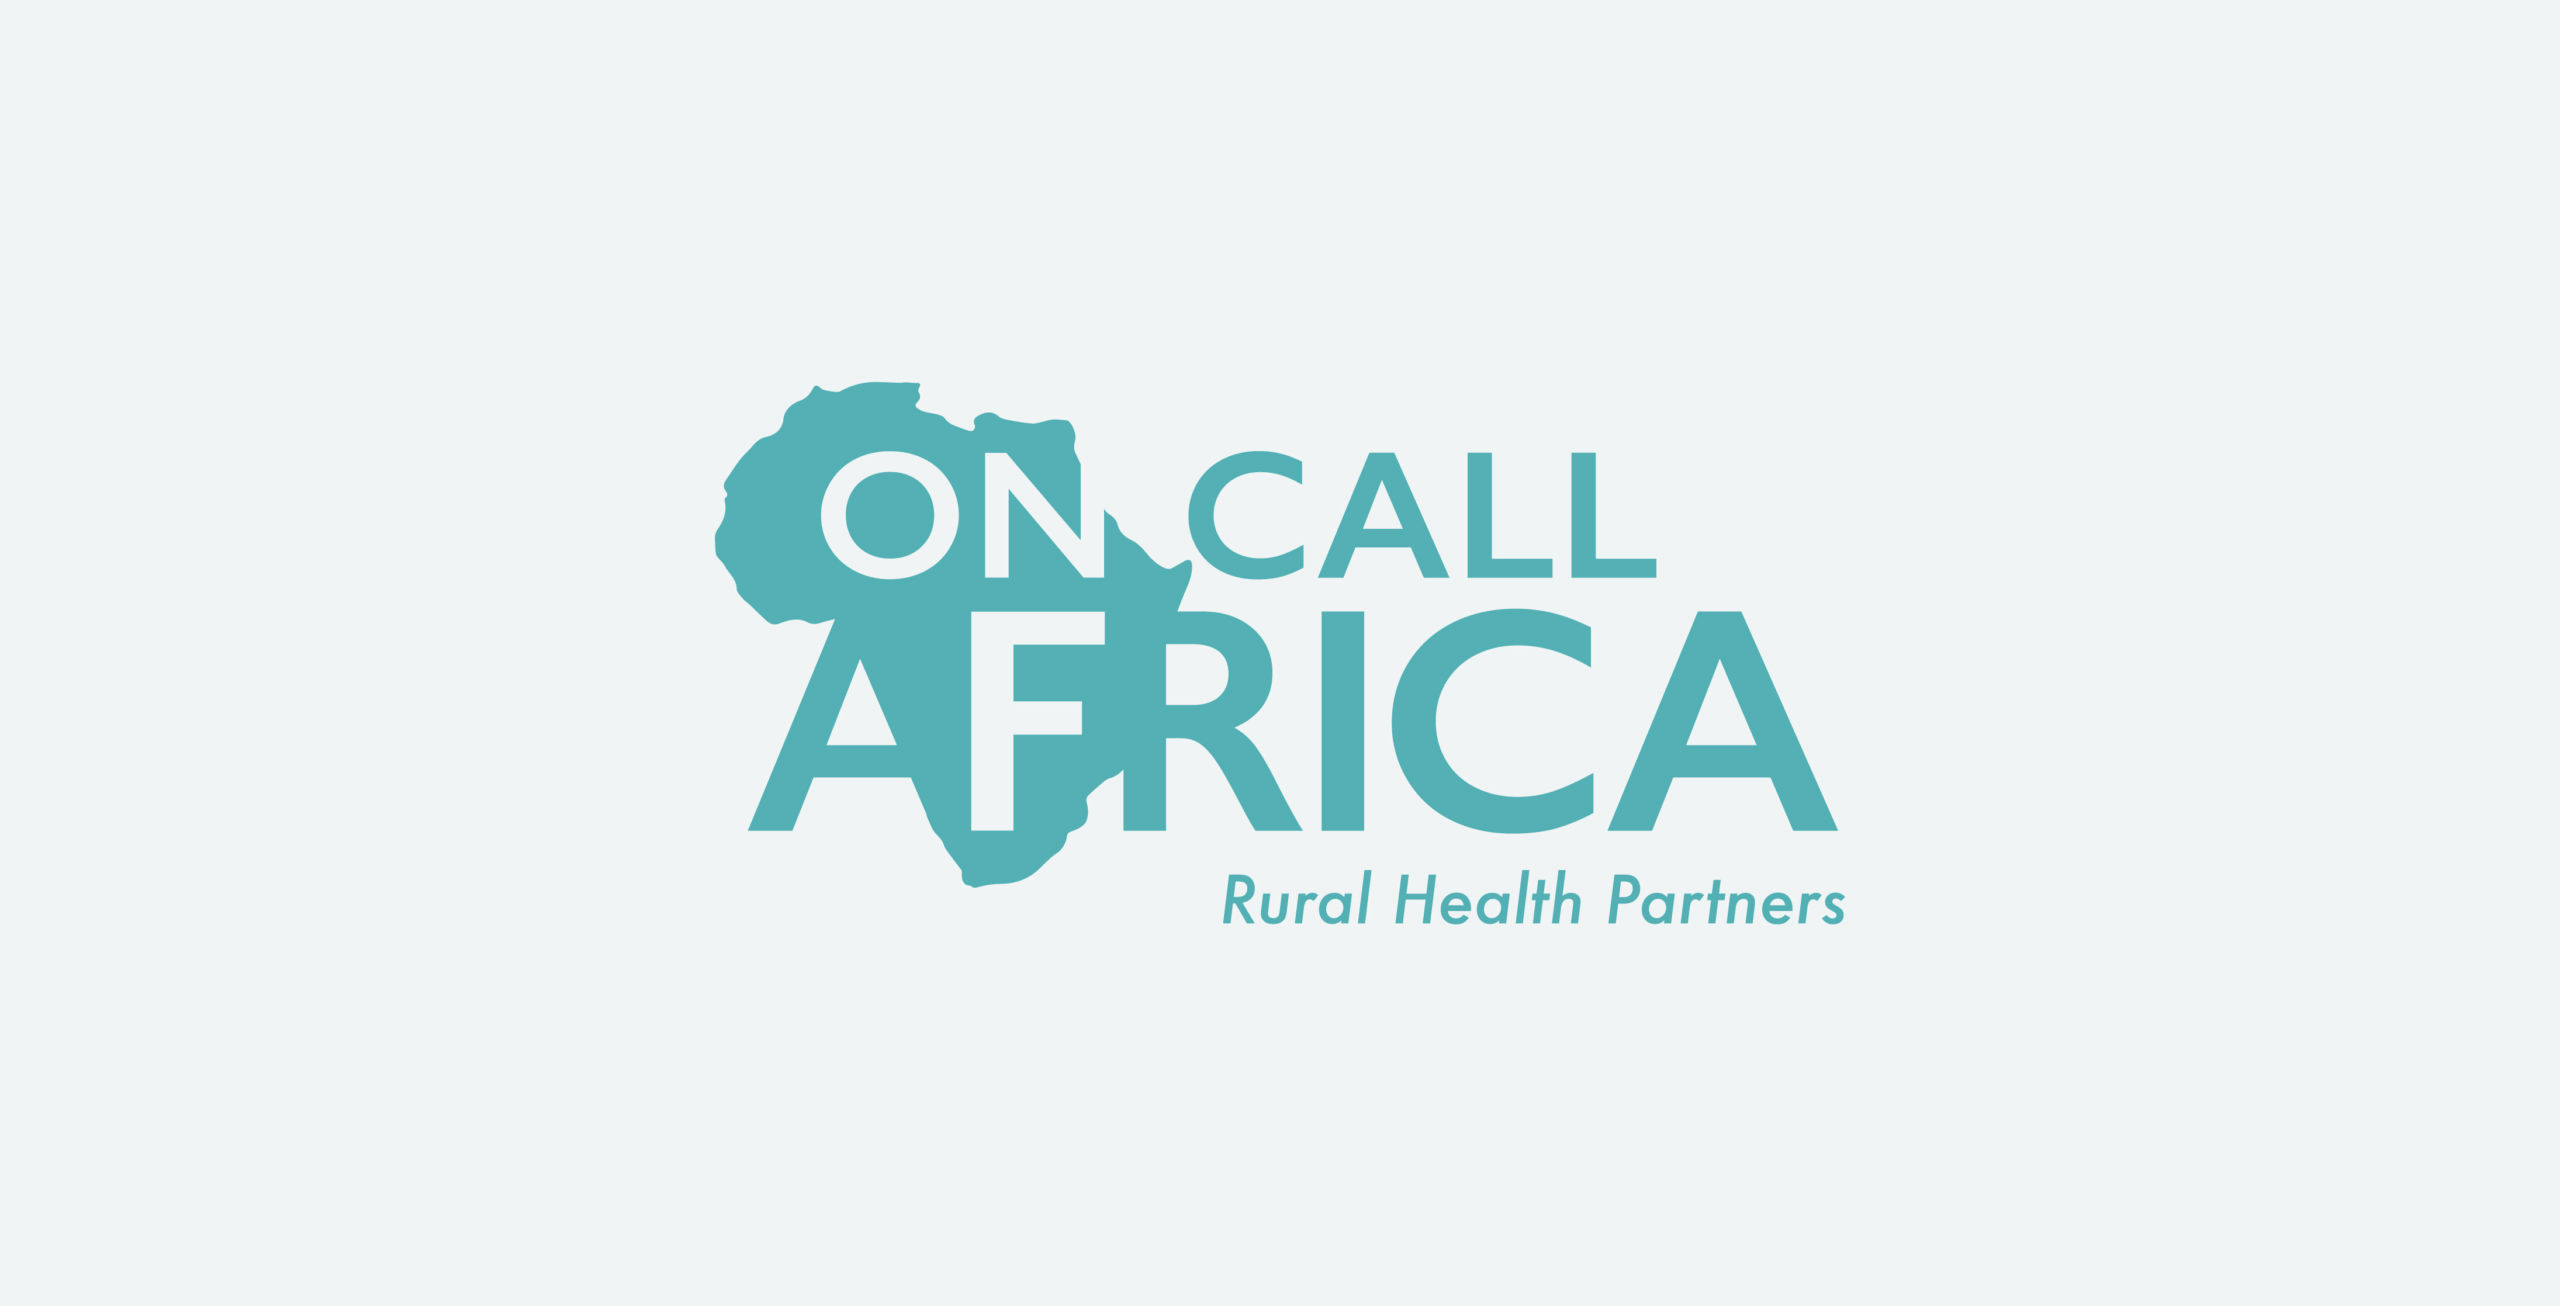 On call Africa Logo Design